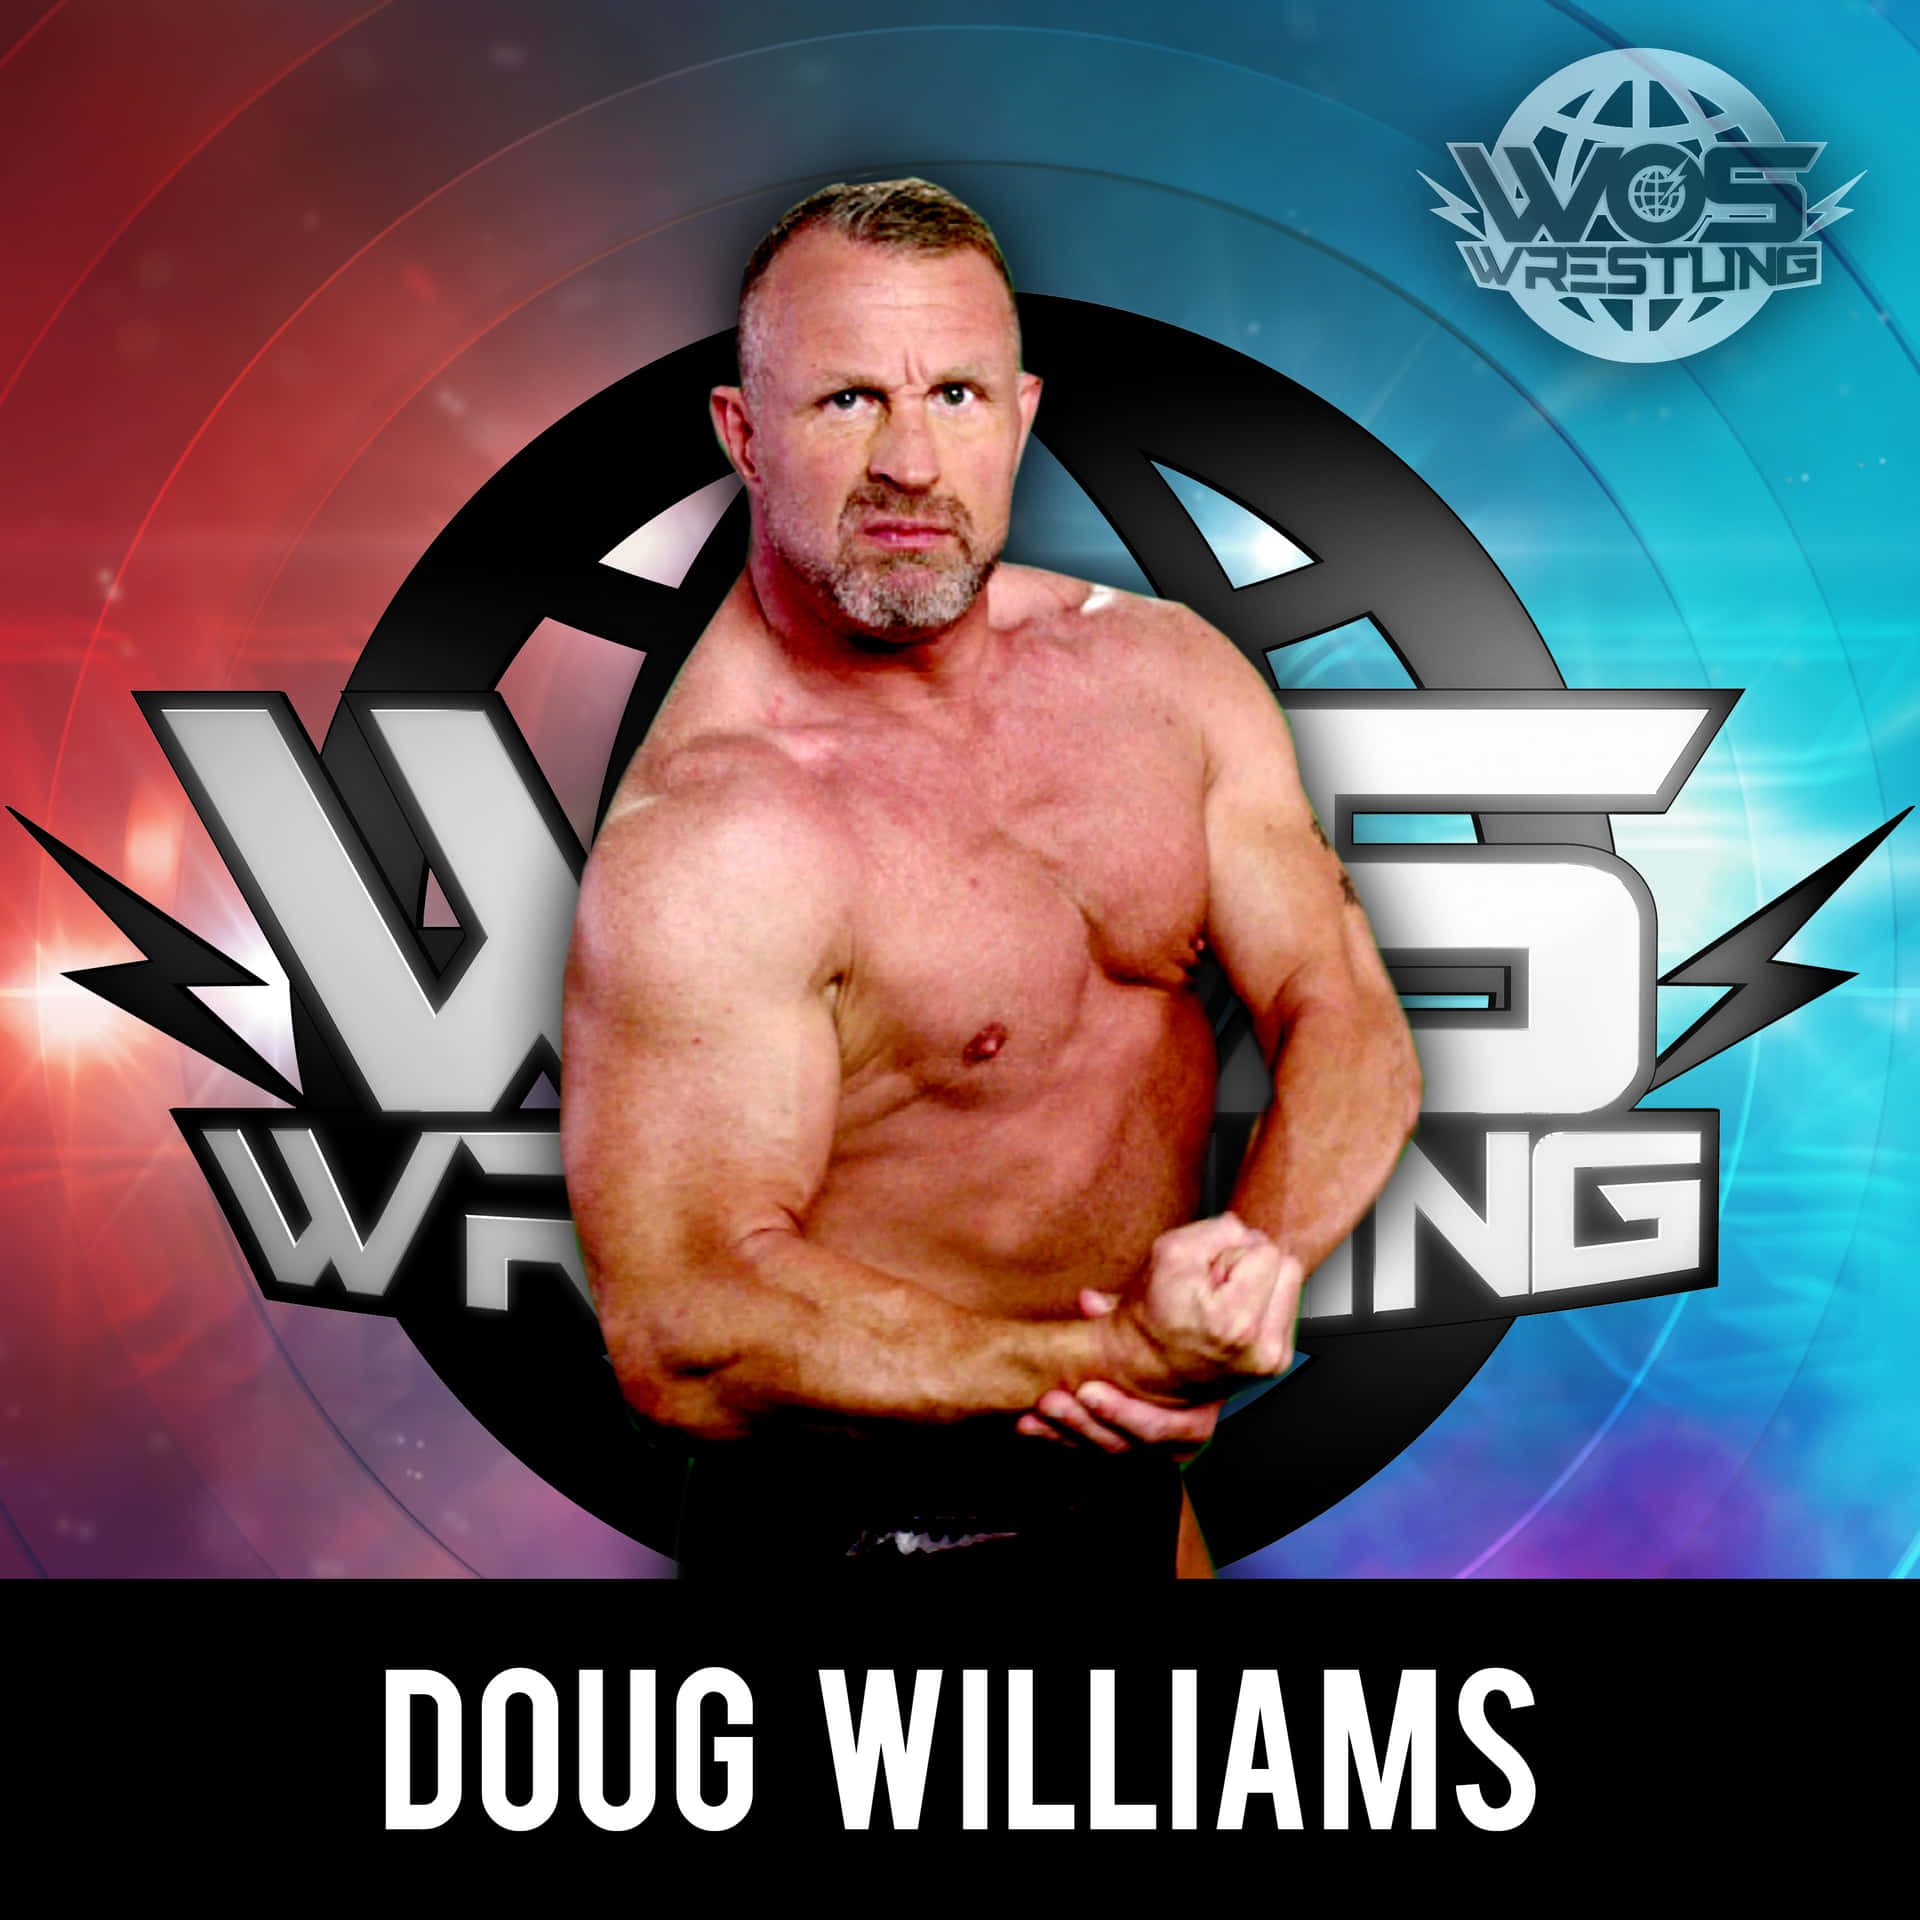 Doug Williams WOS Wrestling Wallpaper